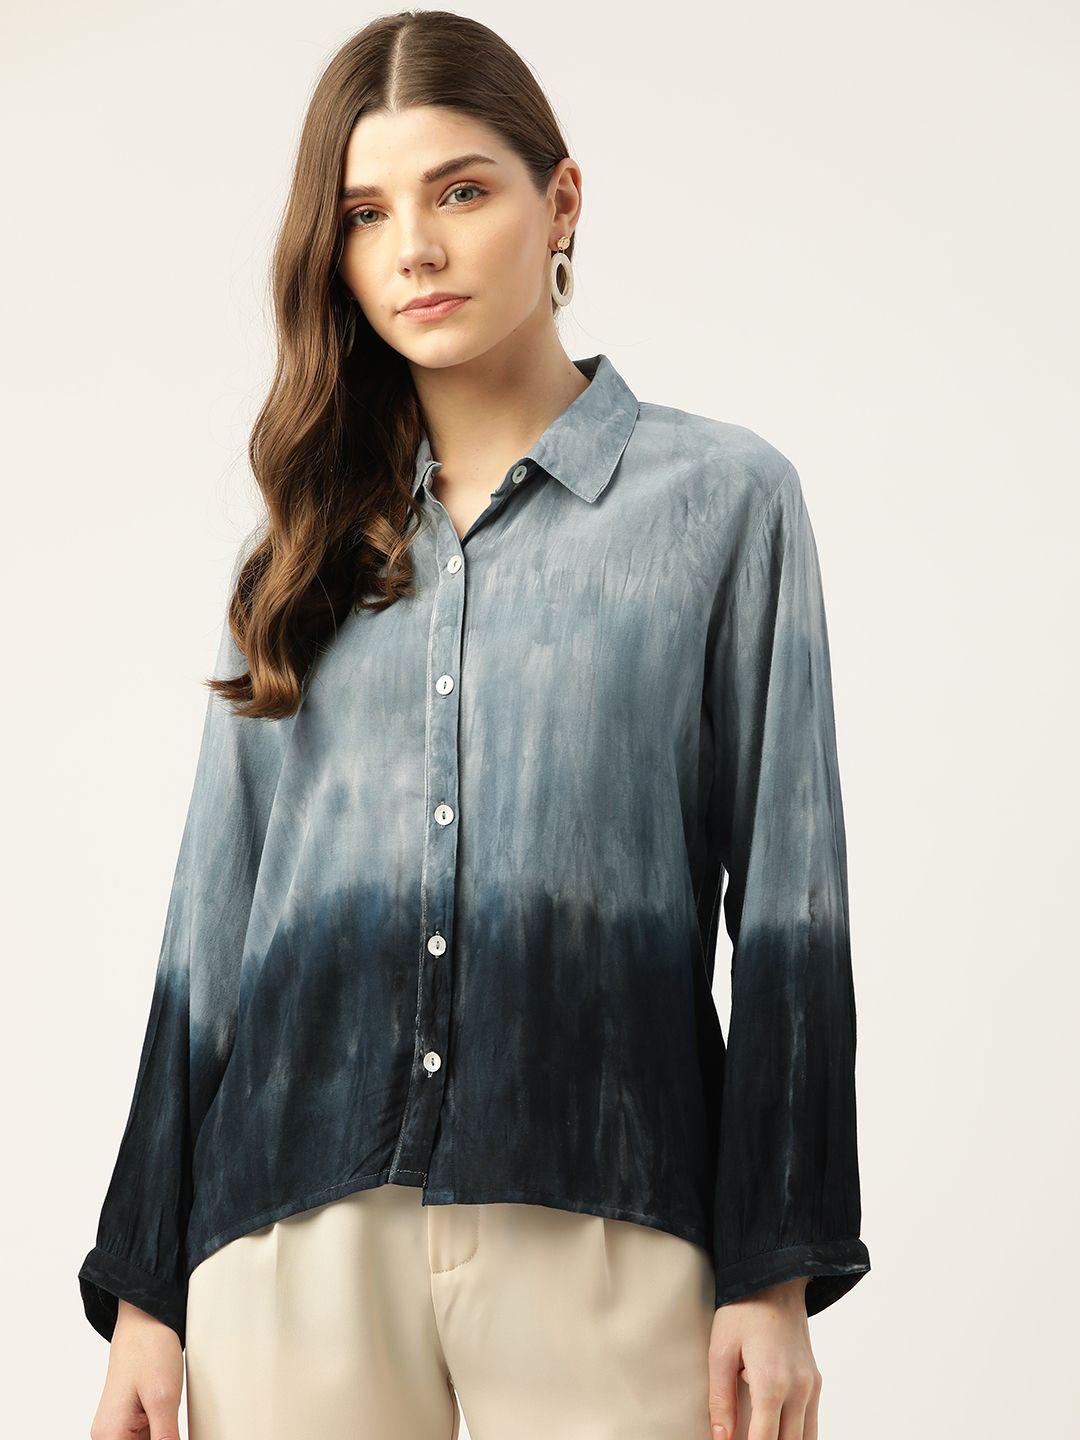 maaesa-blue-tie-and-dye-shirt-style-longline-top